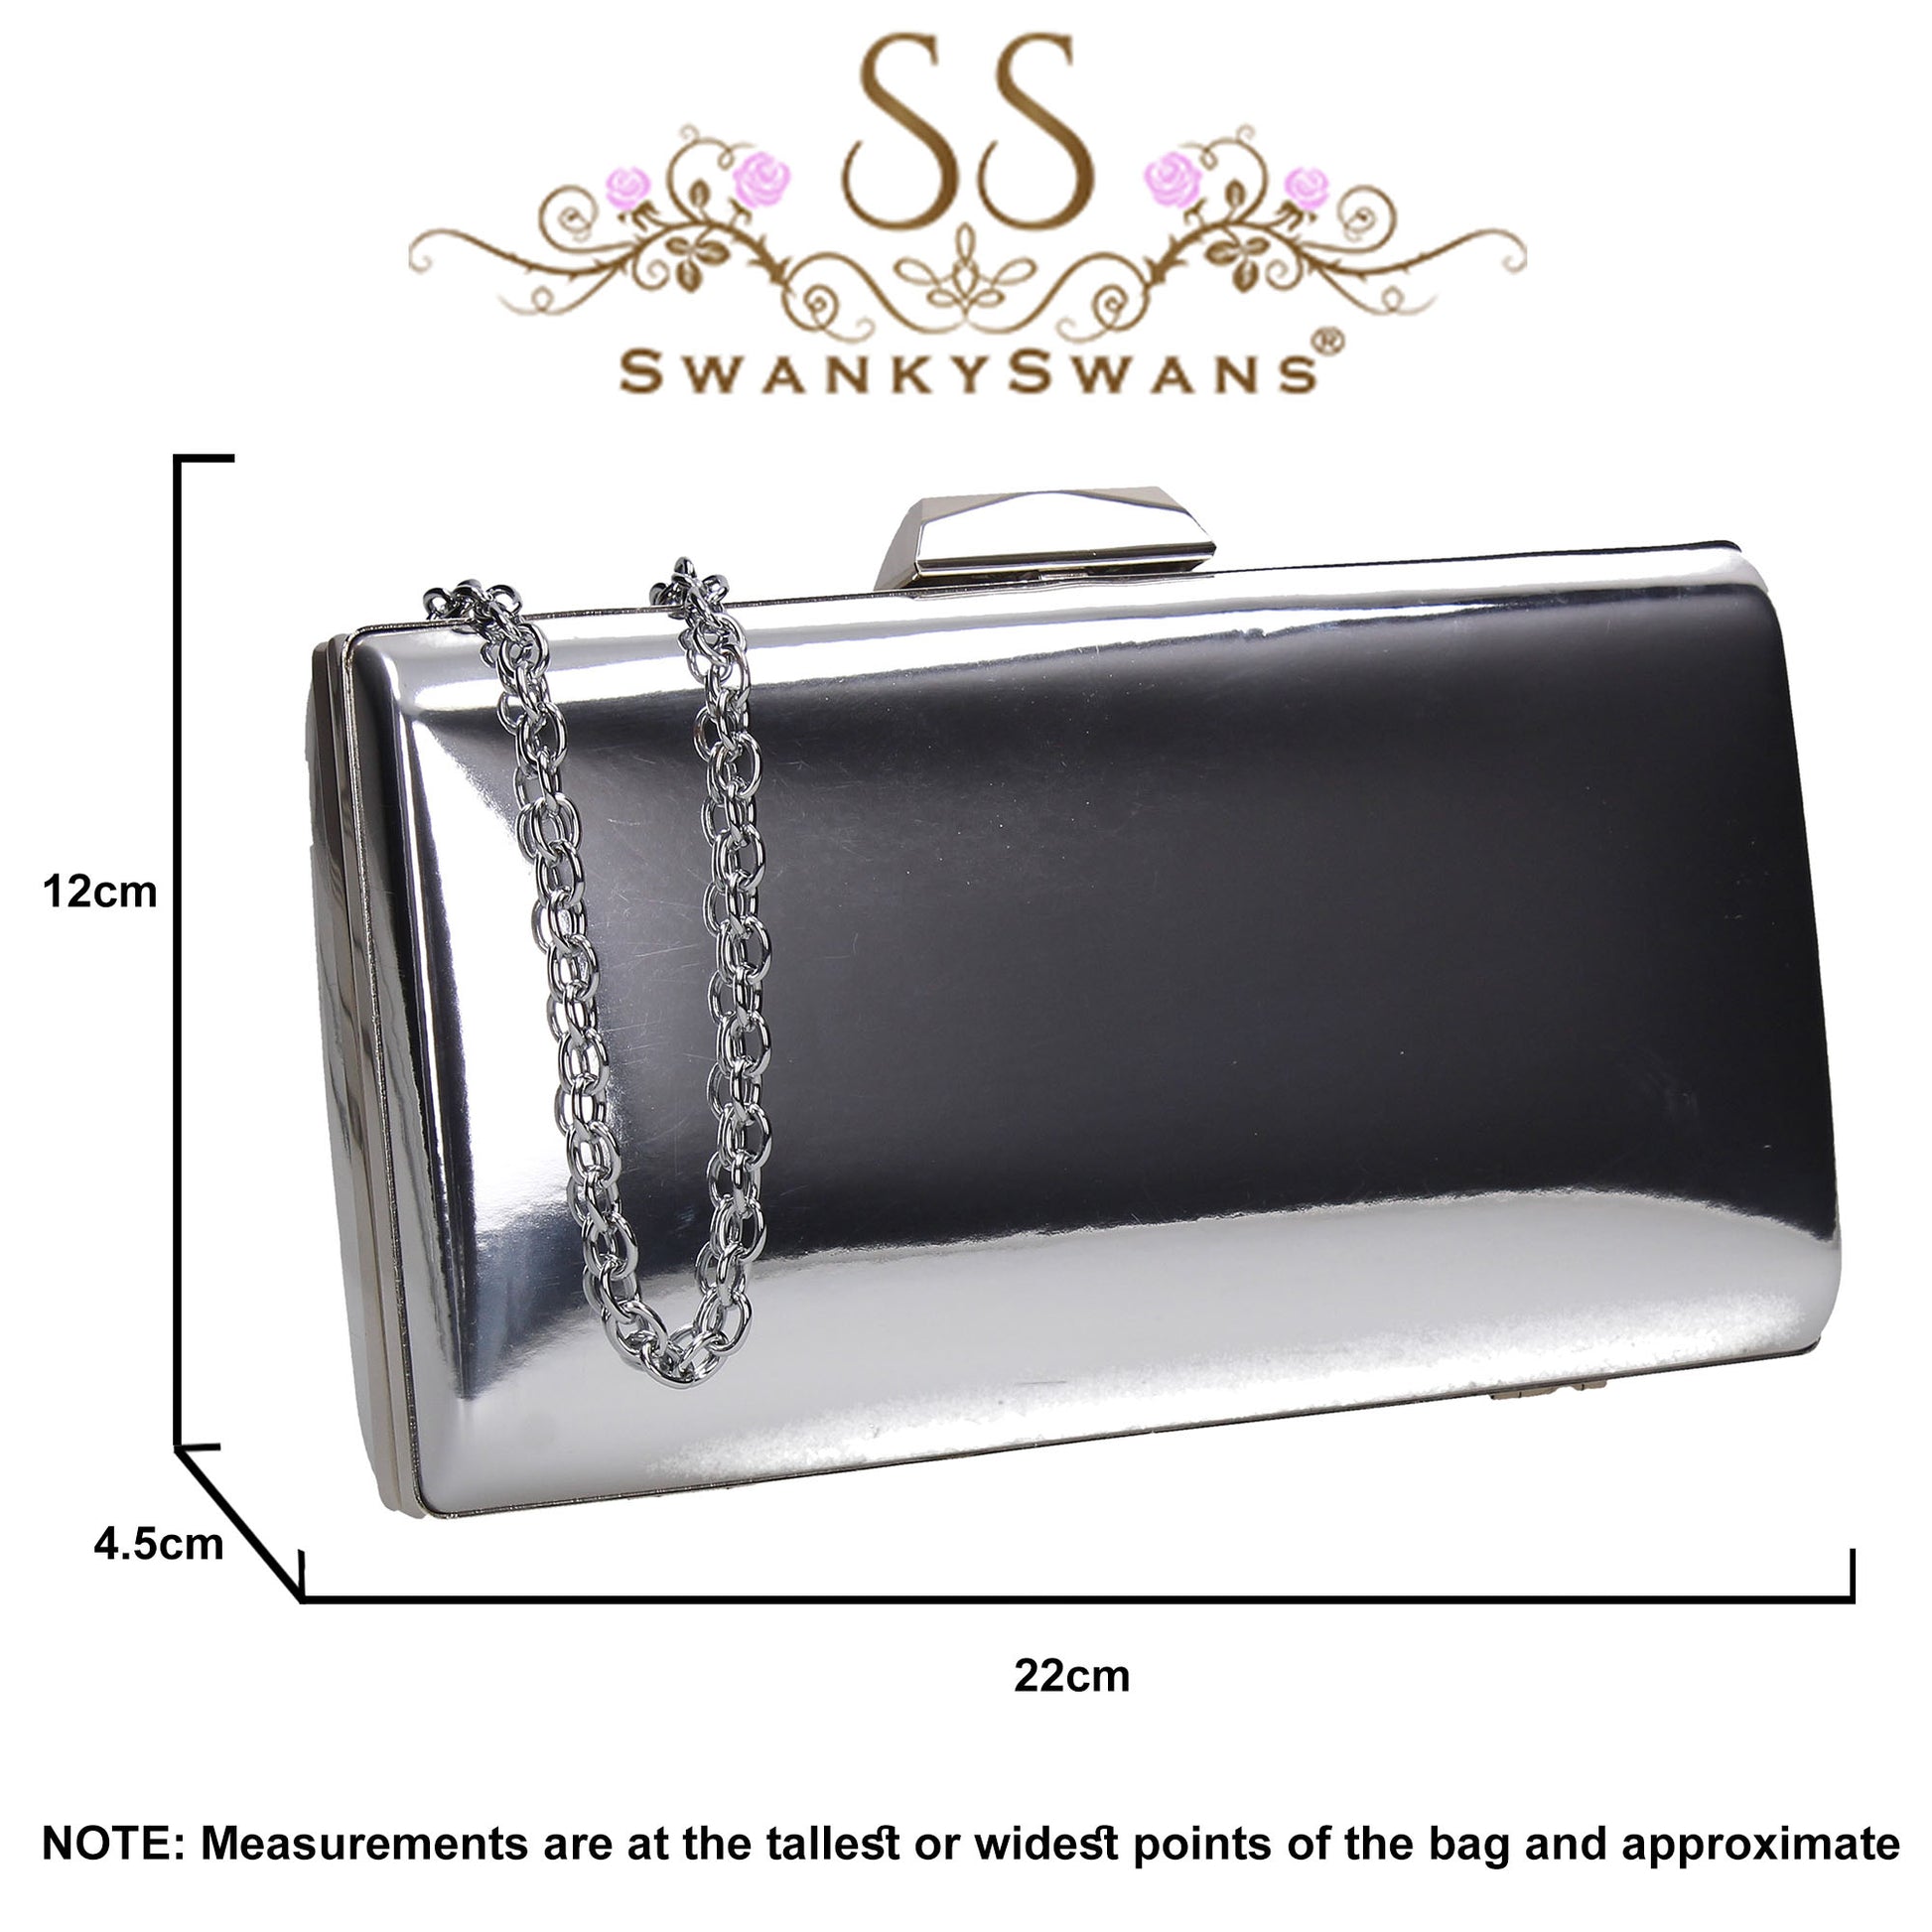 SWANKYSWANS Finley Clutch Bag Silver Cute Cheap Clutch Bag For Weddings School and Work